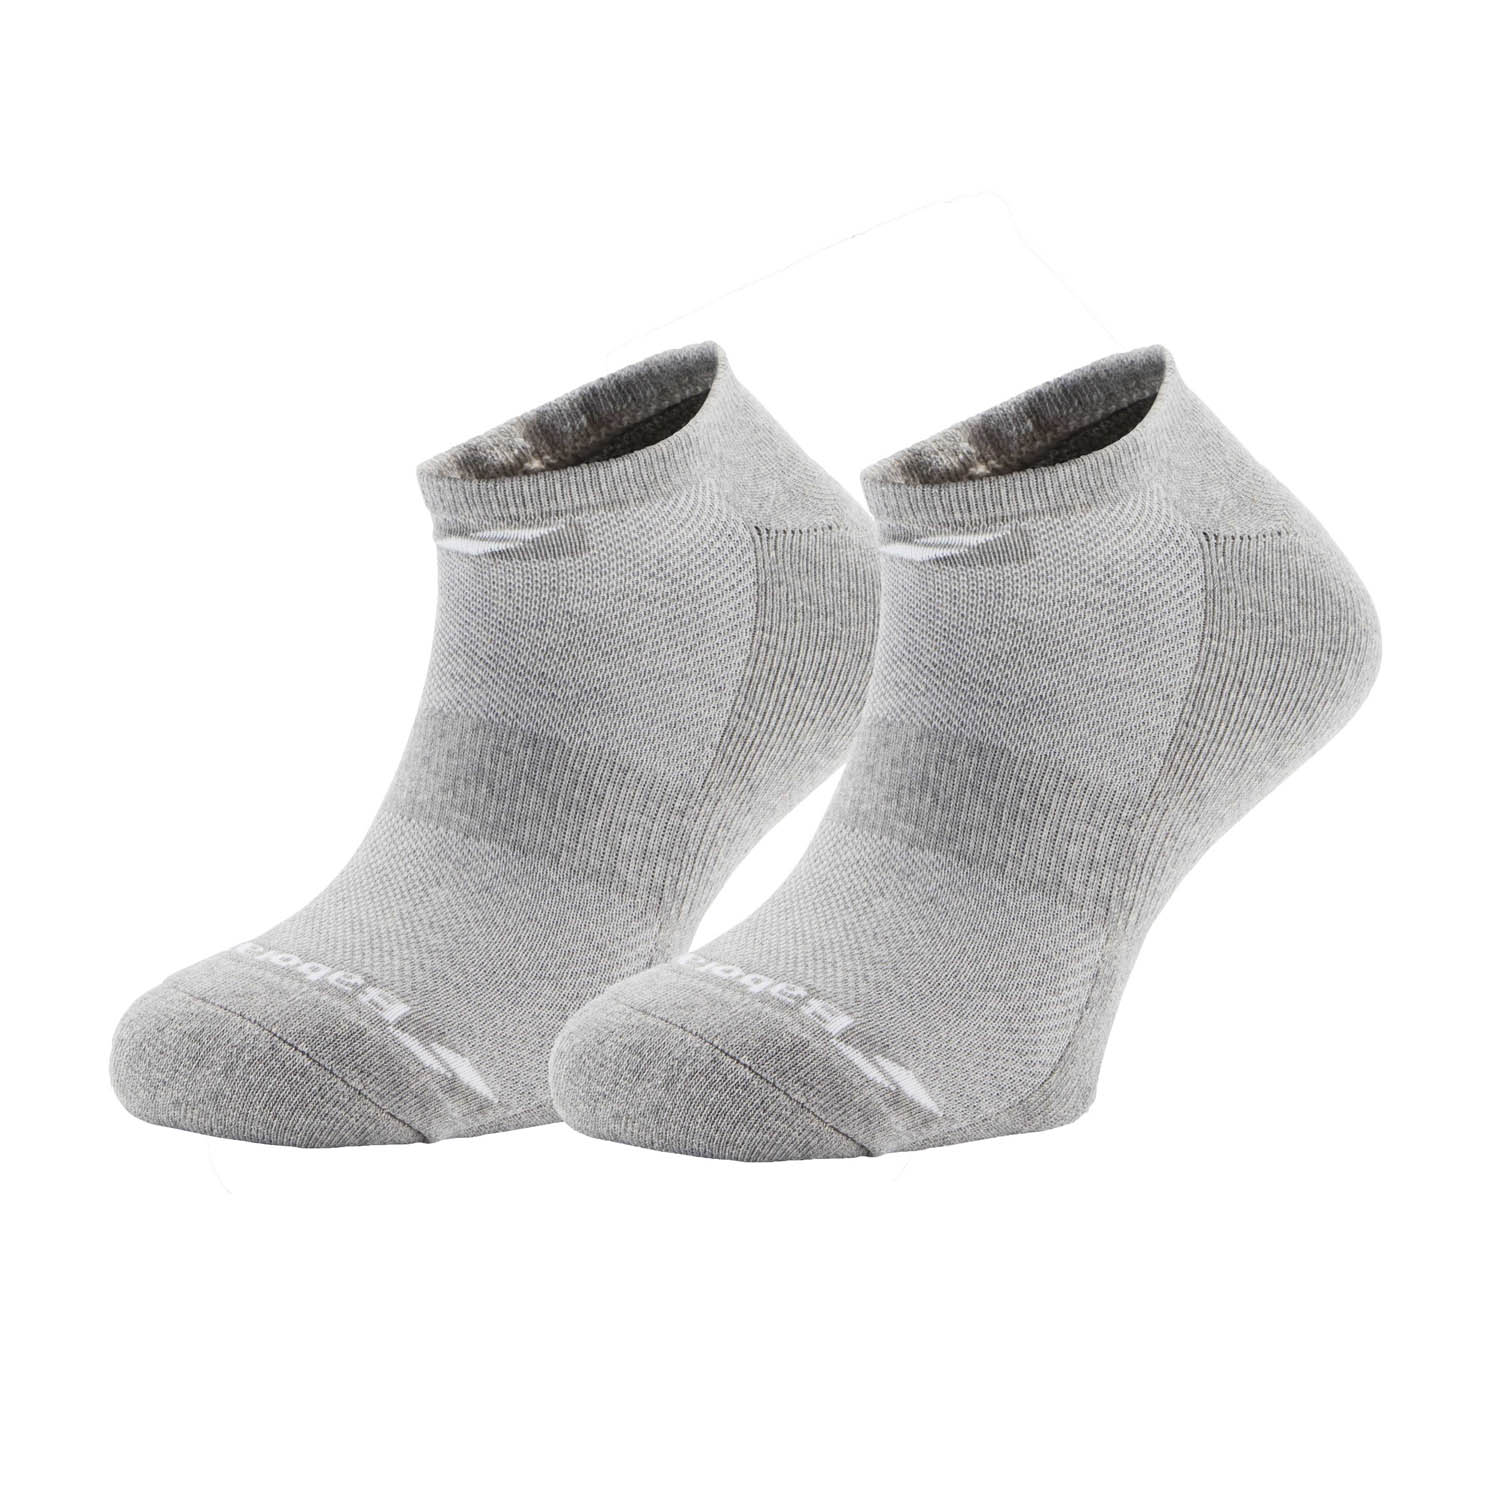 Babolat Player x 2 Socks - Grey